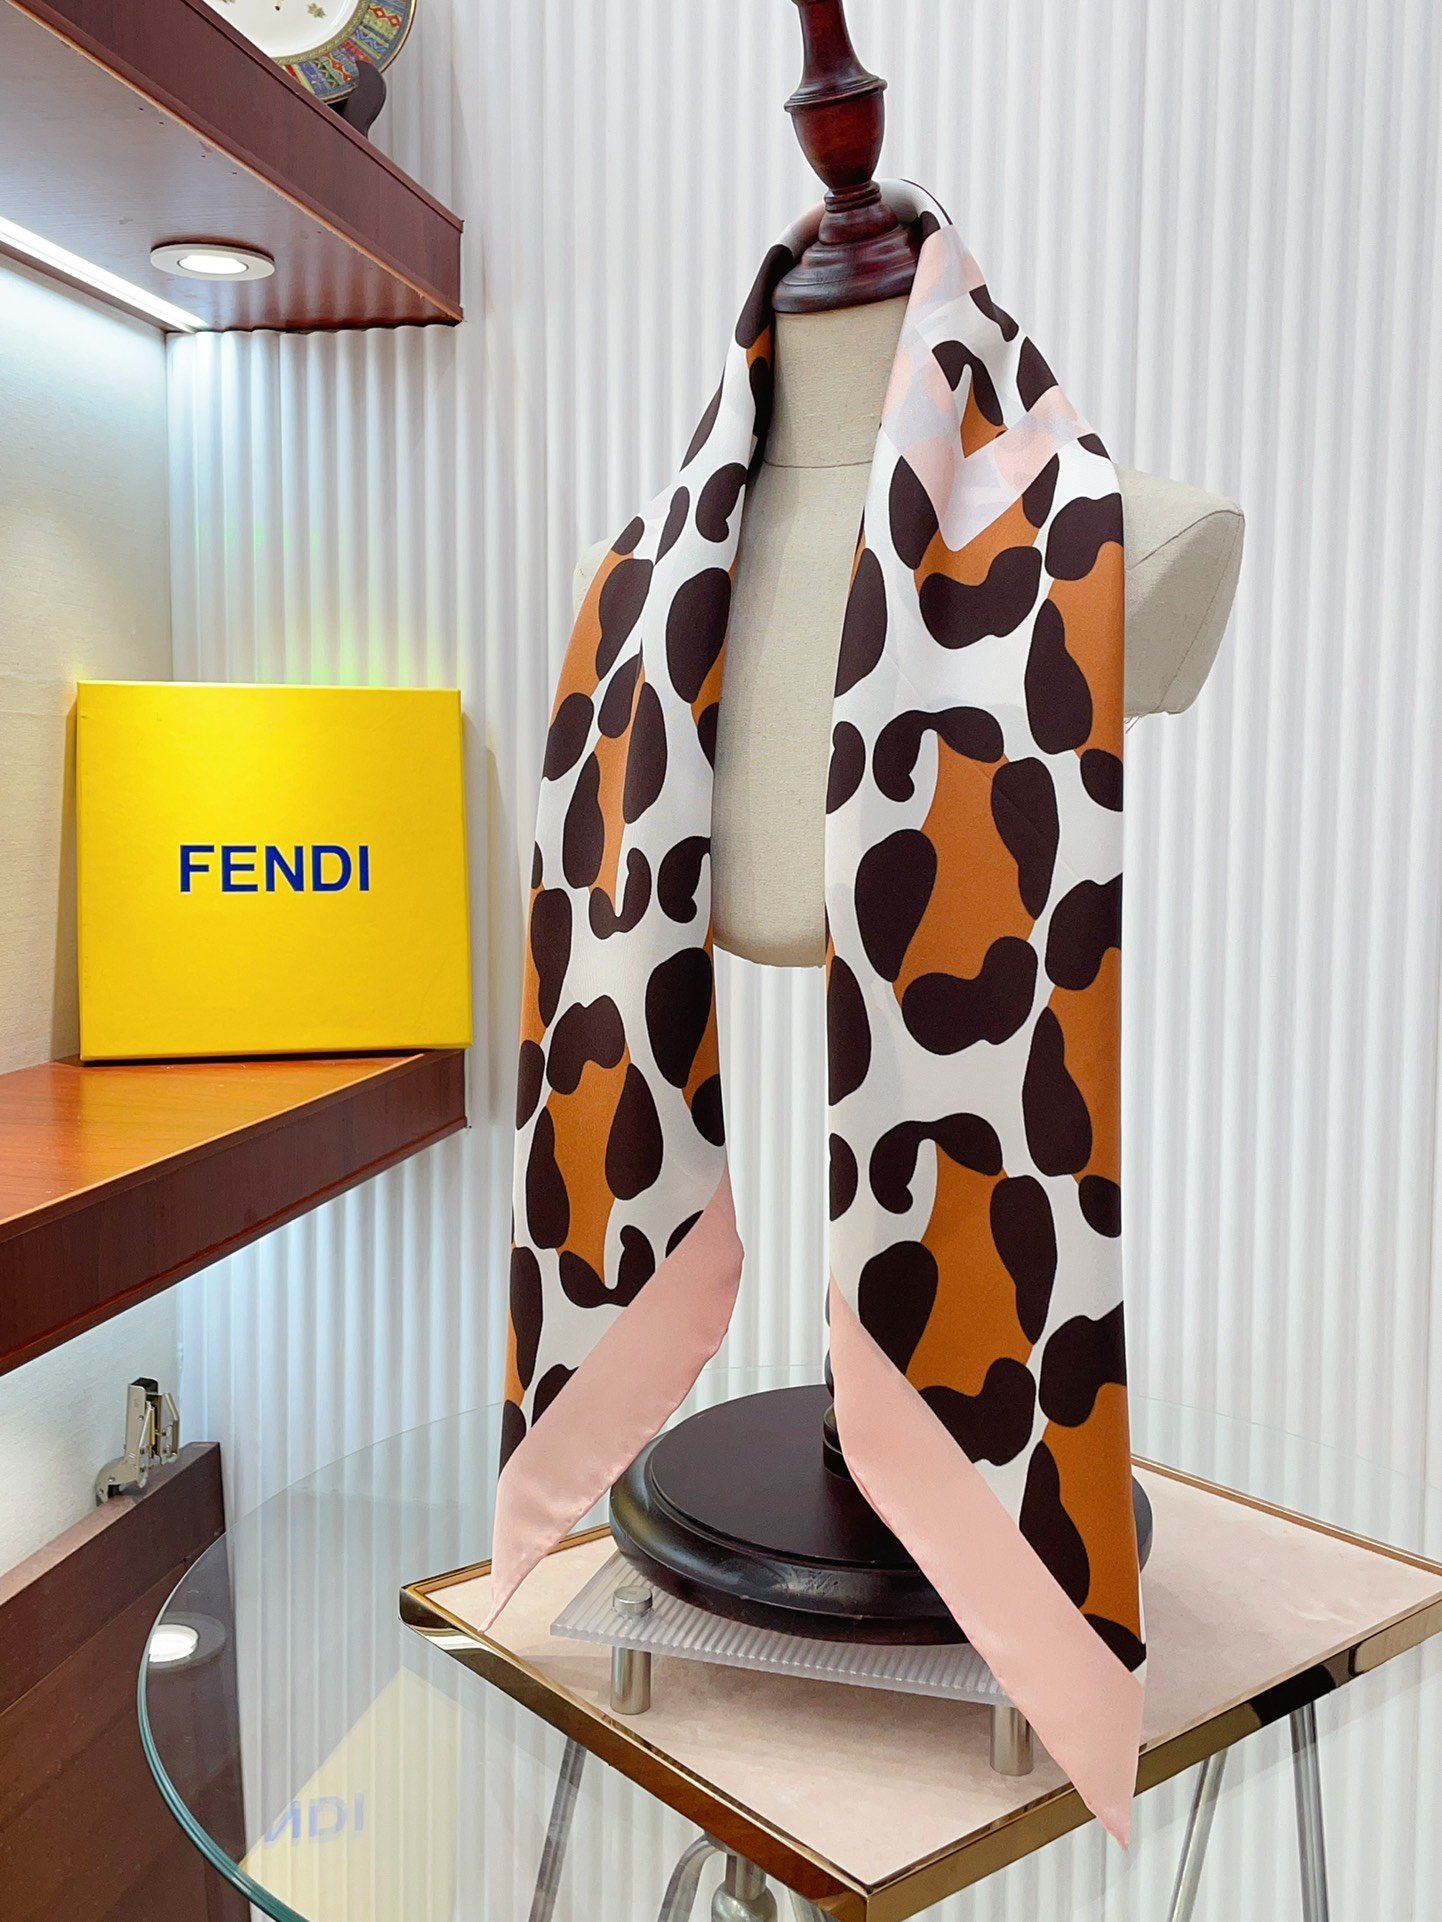 Fendi芬迪成为近一两年最火的品牌之一ＦF字母配豹纹去年更是火到过分.这款恐怕是年度最好看的fendi